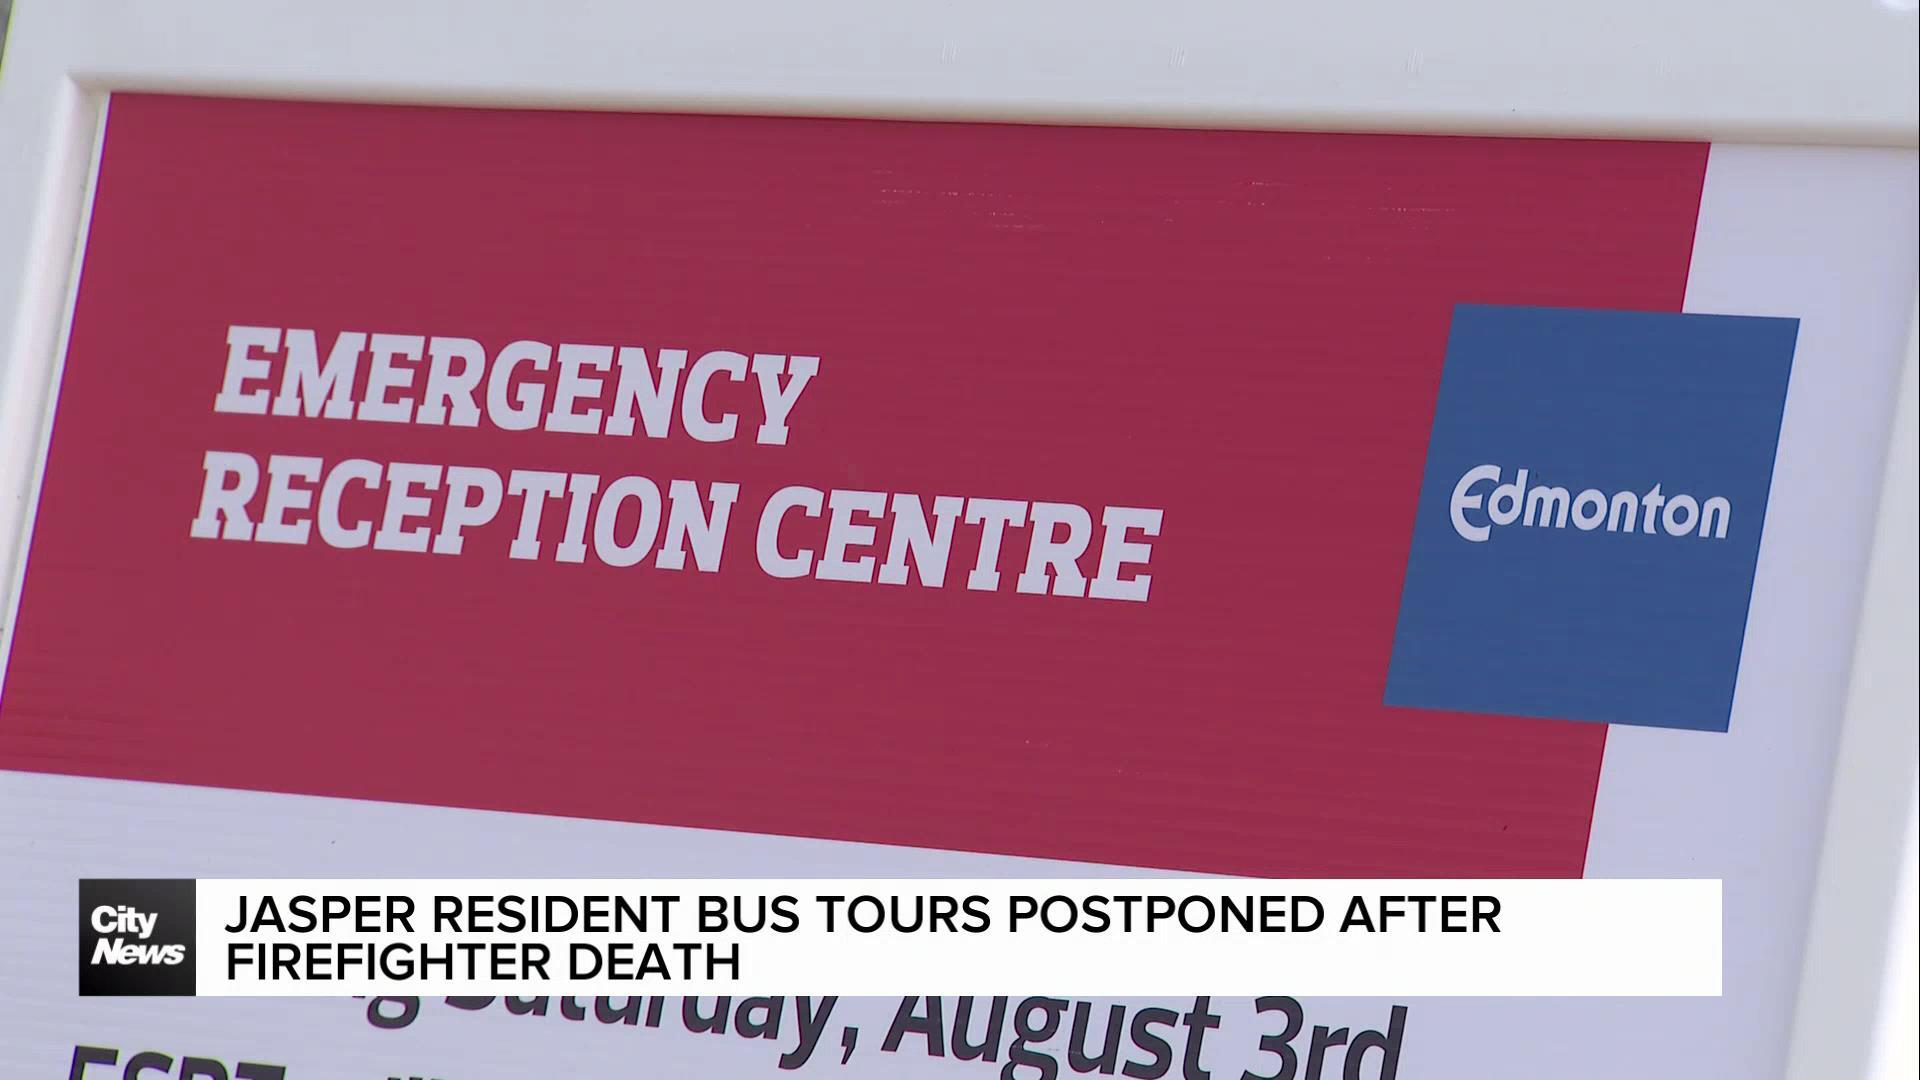 Bus tours for Jasper residents postponed to Monday